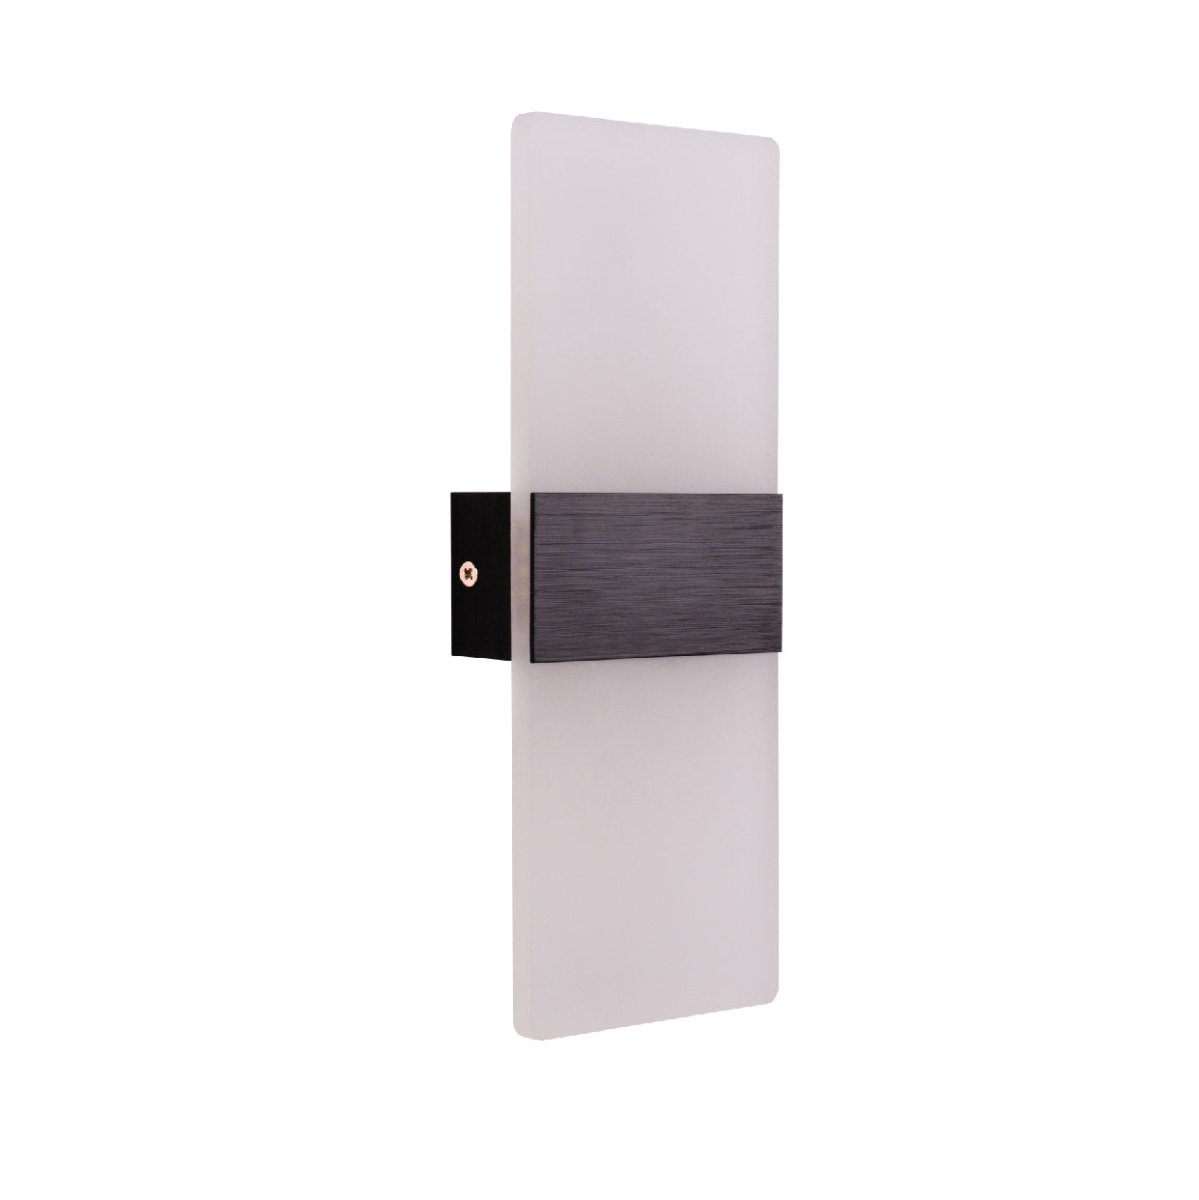 Main image of LED Dark Wood Metal Acrylic Wall Light 4W Cool White 4000K | TEKLED 151-19622